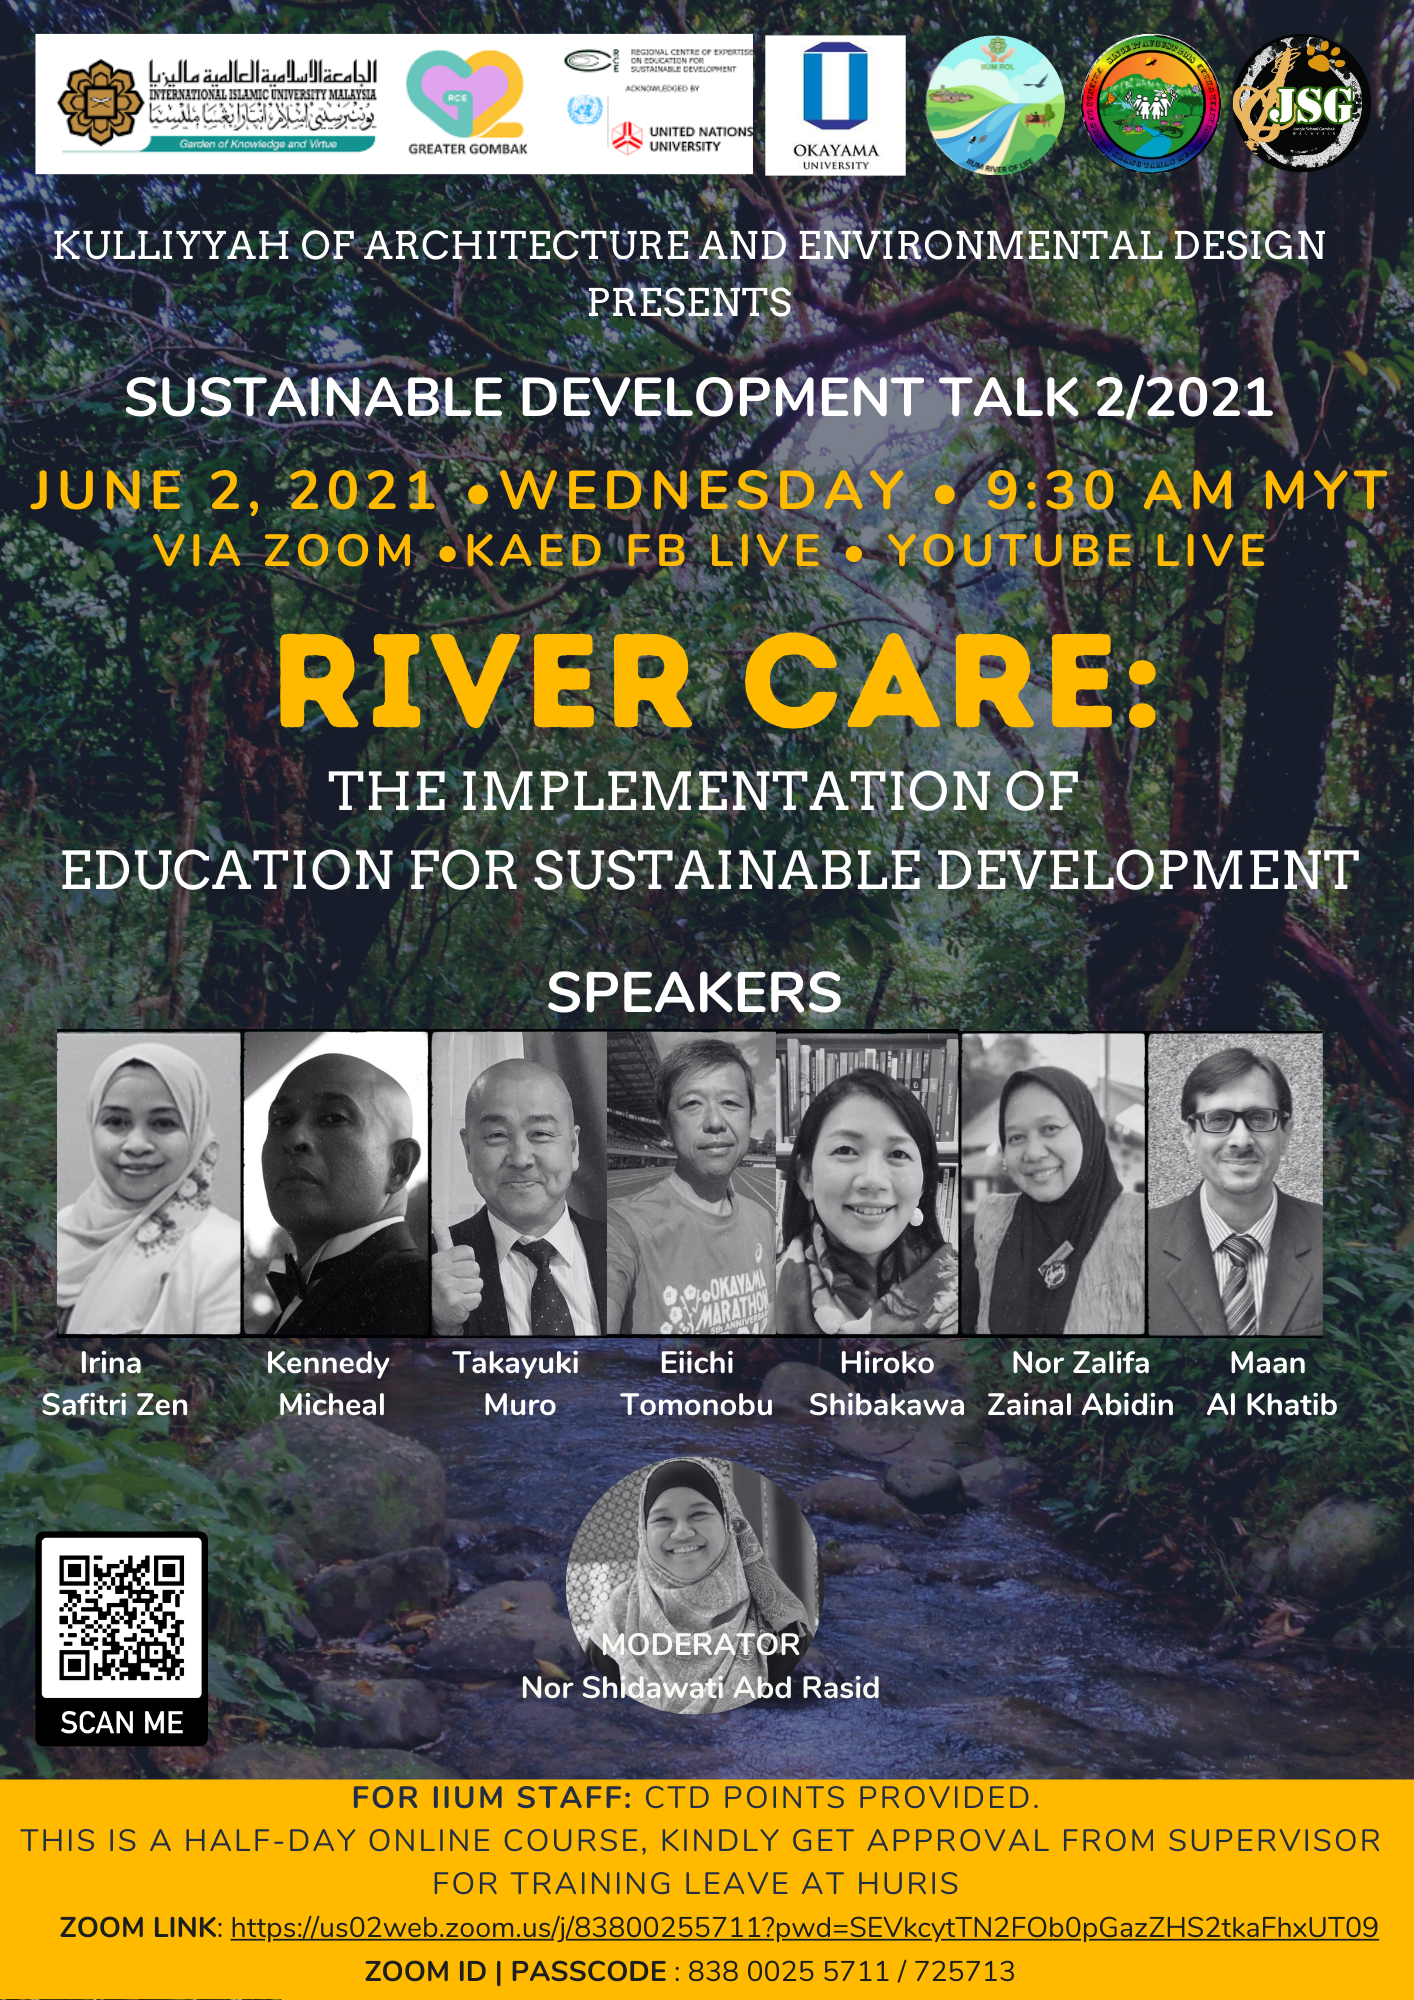 KAED Sustainable Development Talk 2/2021: River Care - The Implementation Education for Sustainable Development